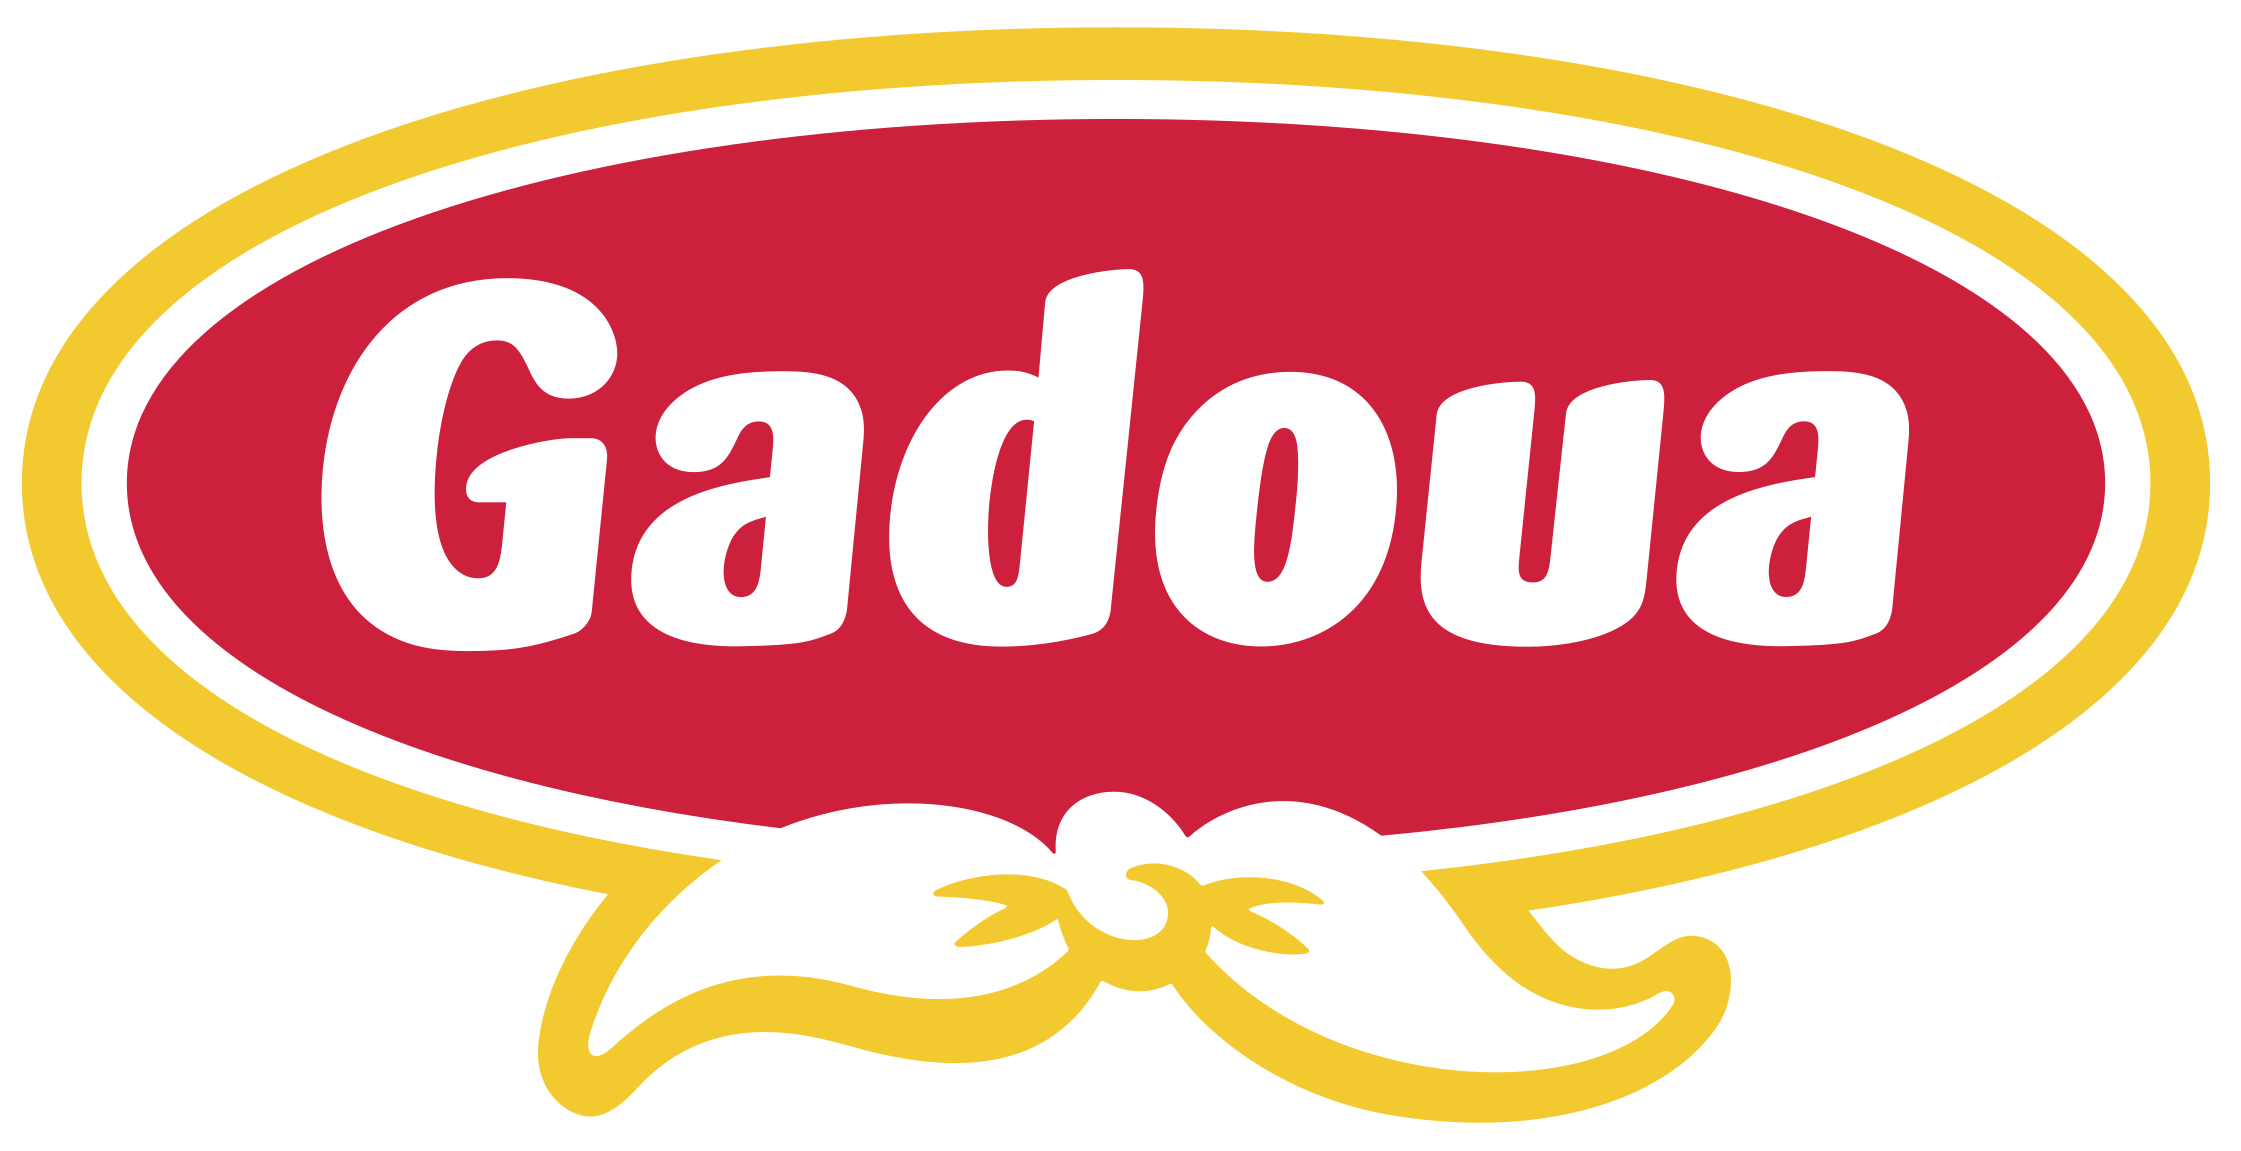 Gadoua.png